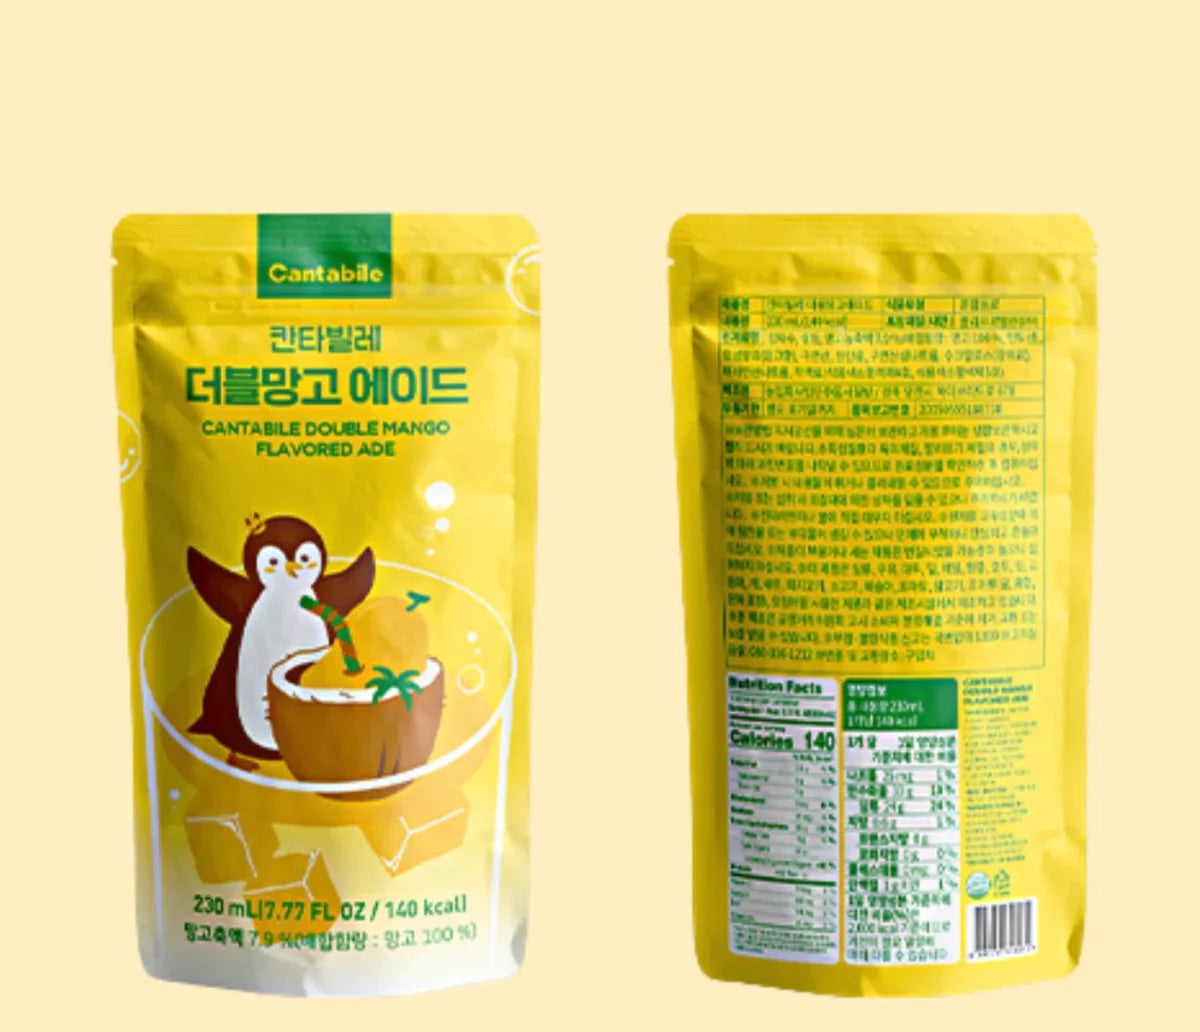 Cantabile Double Mango Flavored Ade - 230mL/7.77oz